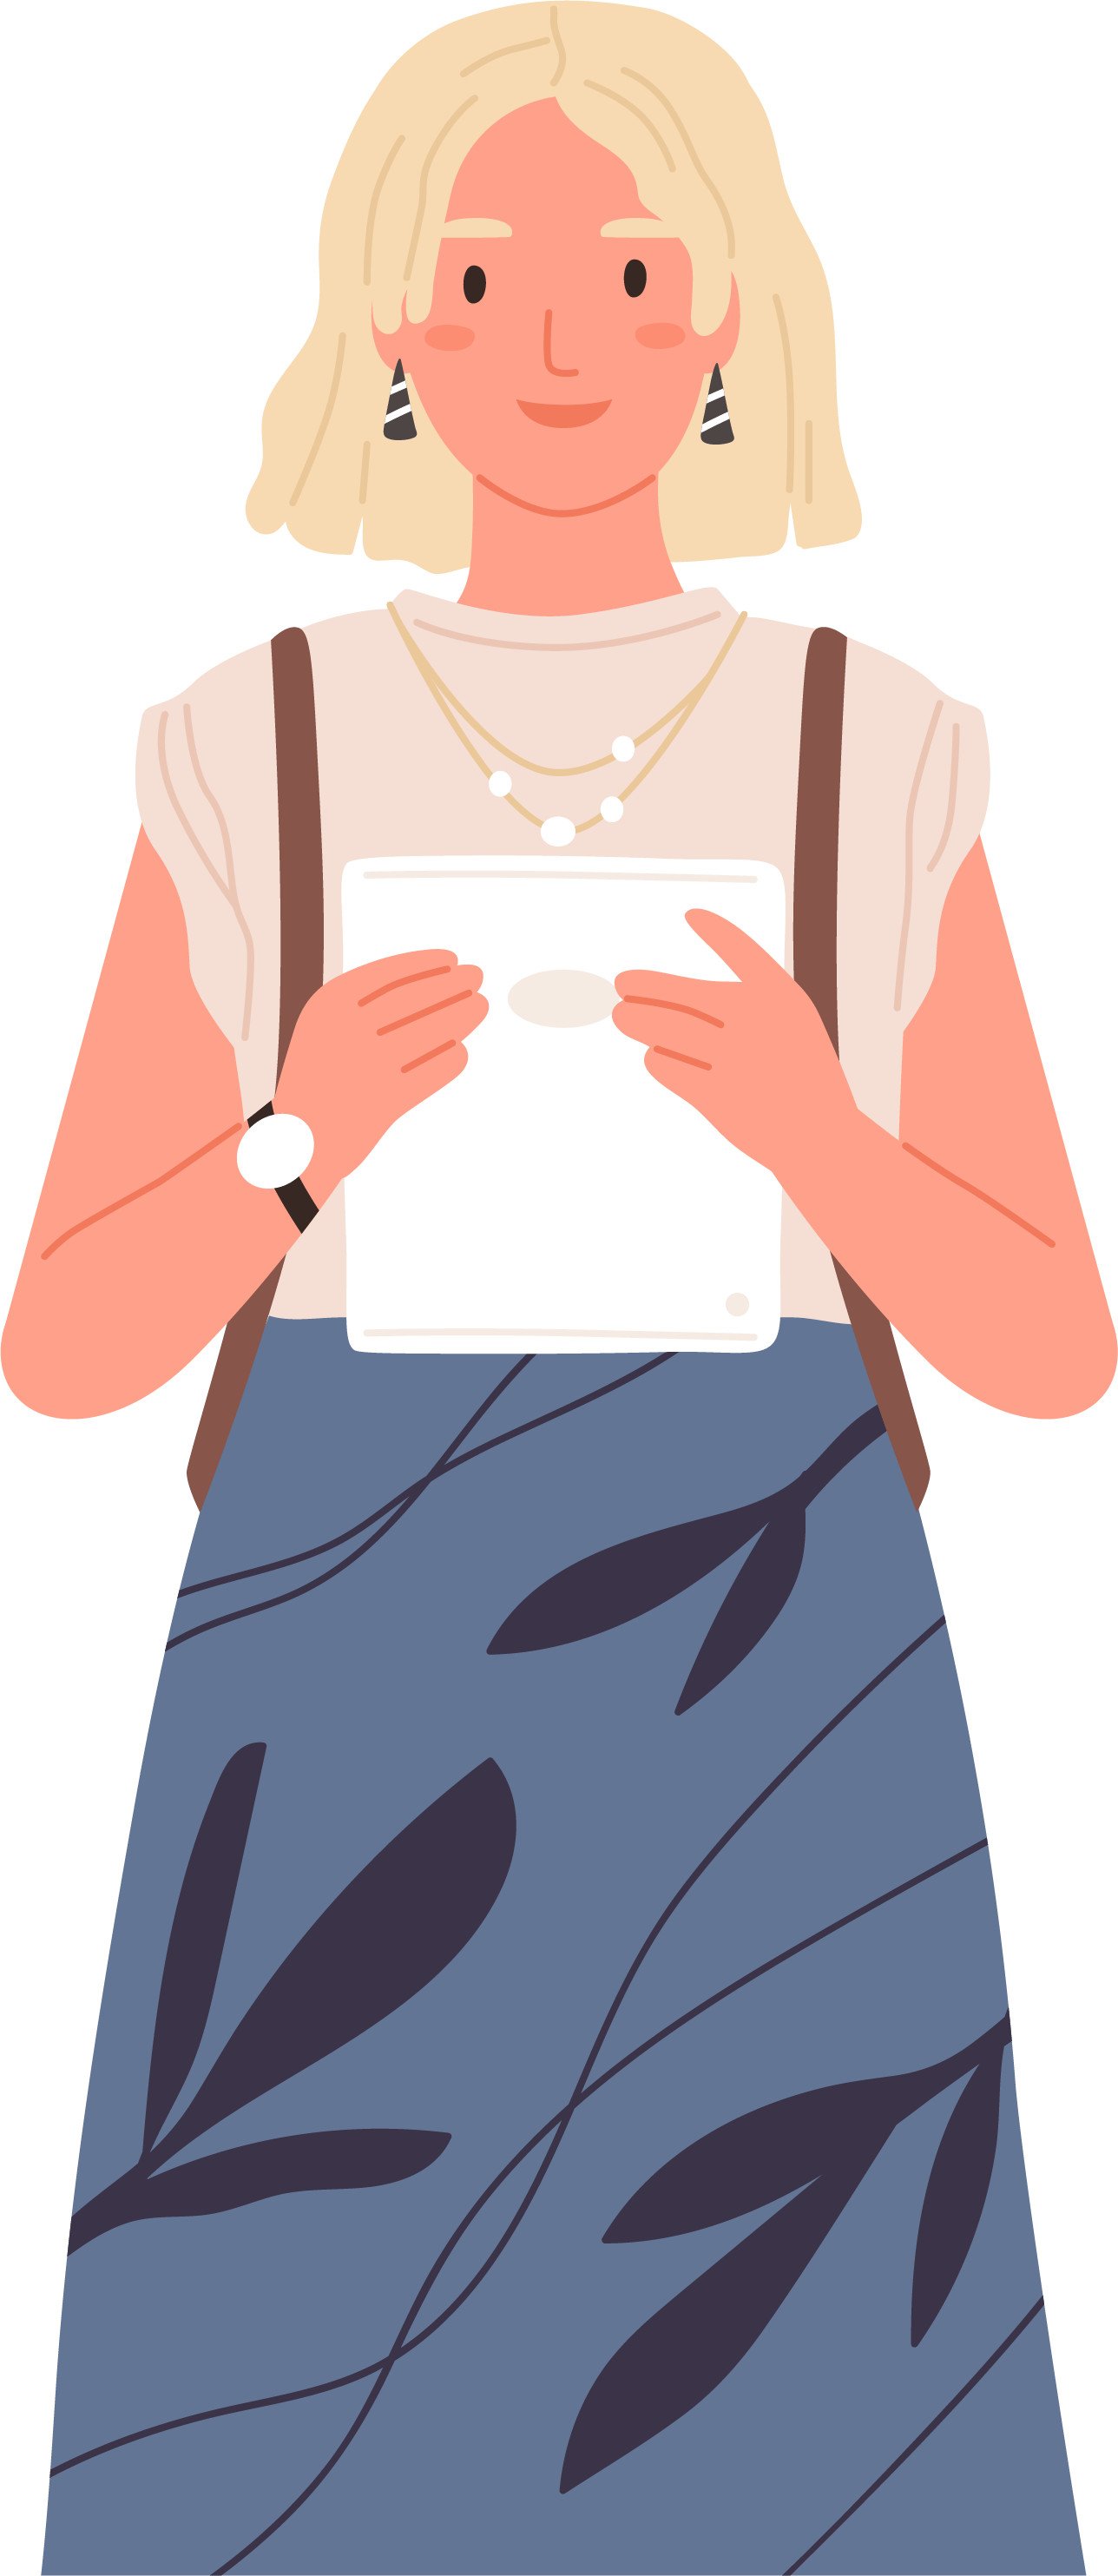 An illustration of a tutor holding an iPad.